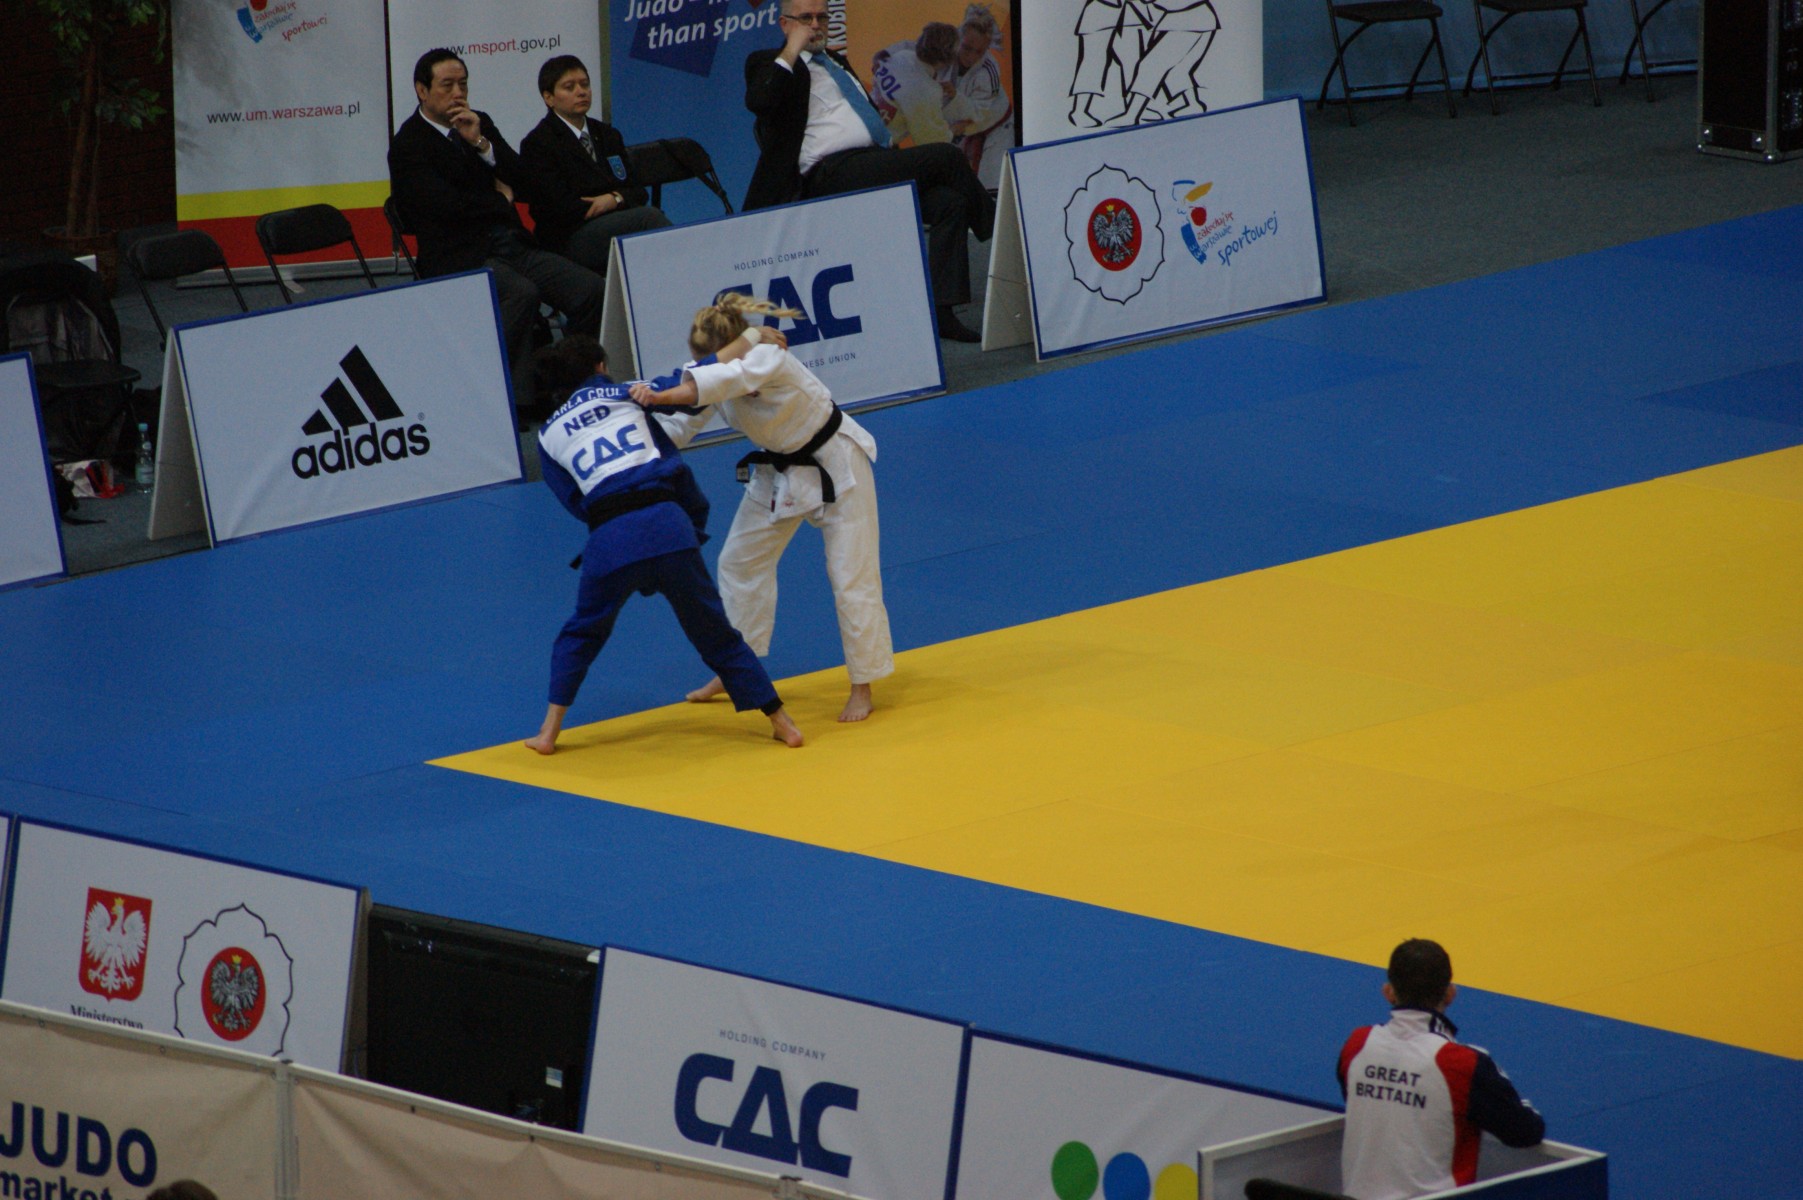 Puchar Swiata Judo Warszawa 2012 (22).JPG